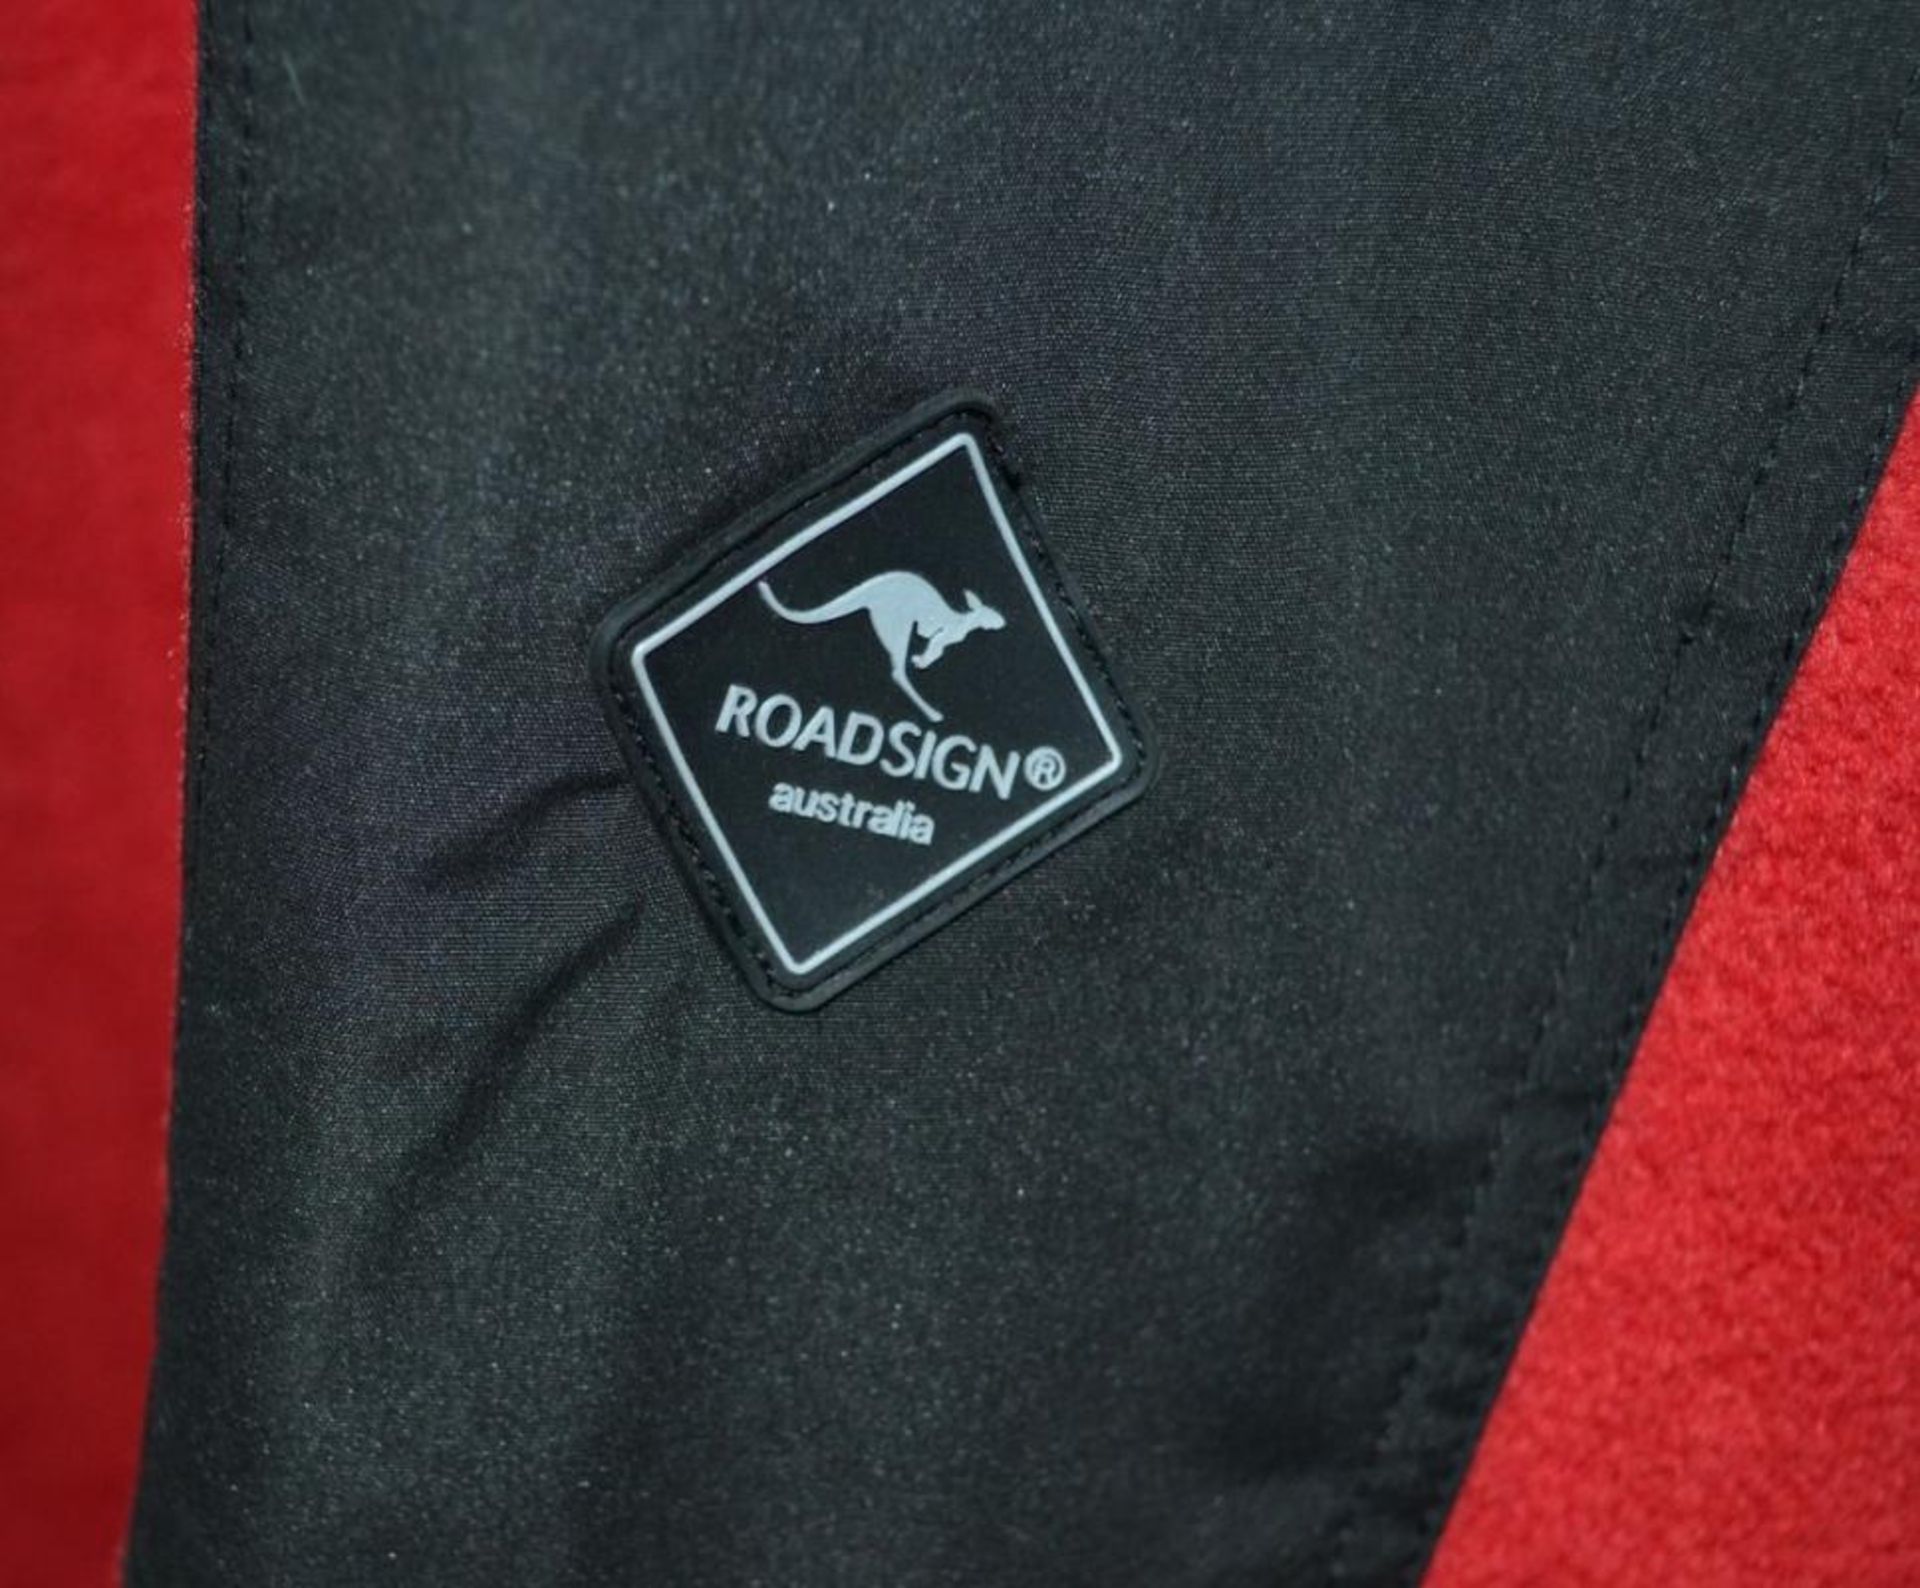 1 x Premium Branded Womens Winter Fleece Jacket - Wind Proof & Water Resistant - Colour: Red / Black - Image 3 of 6